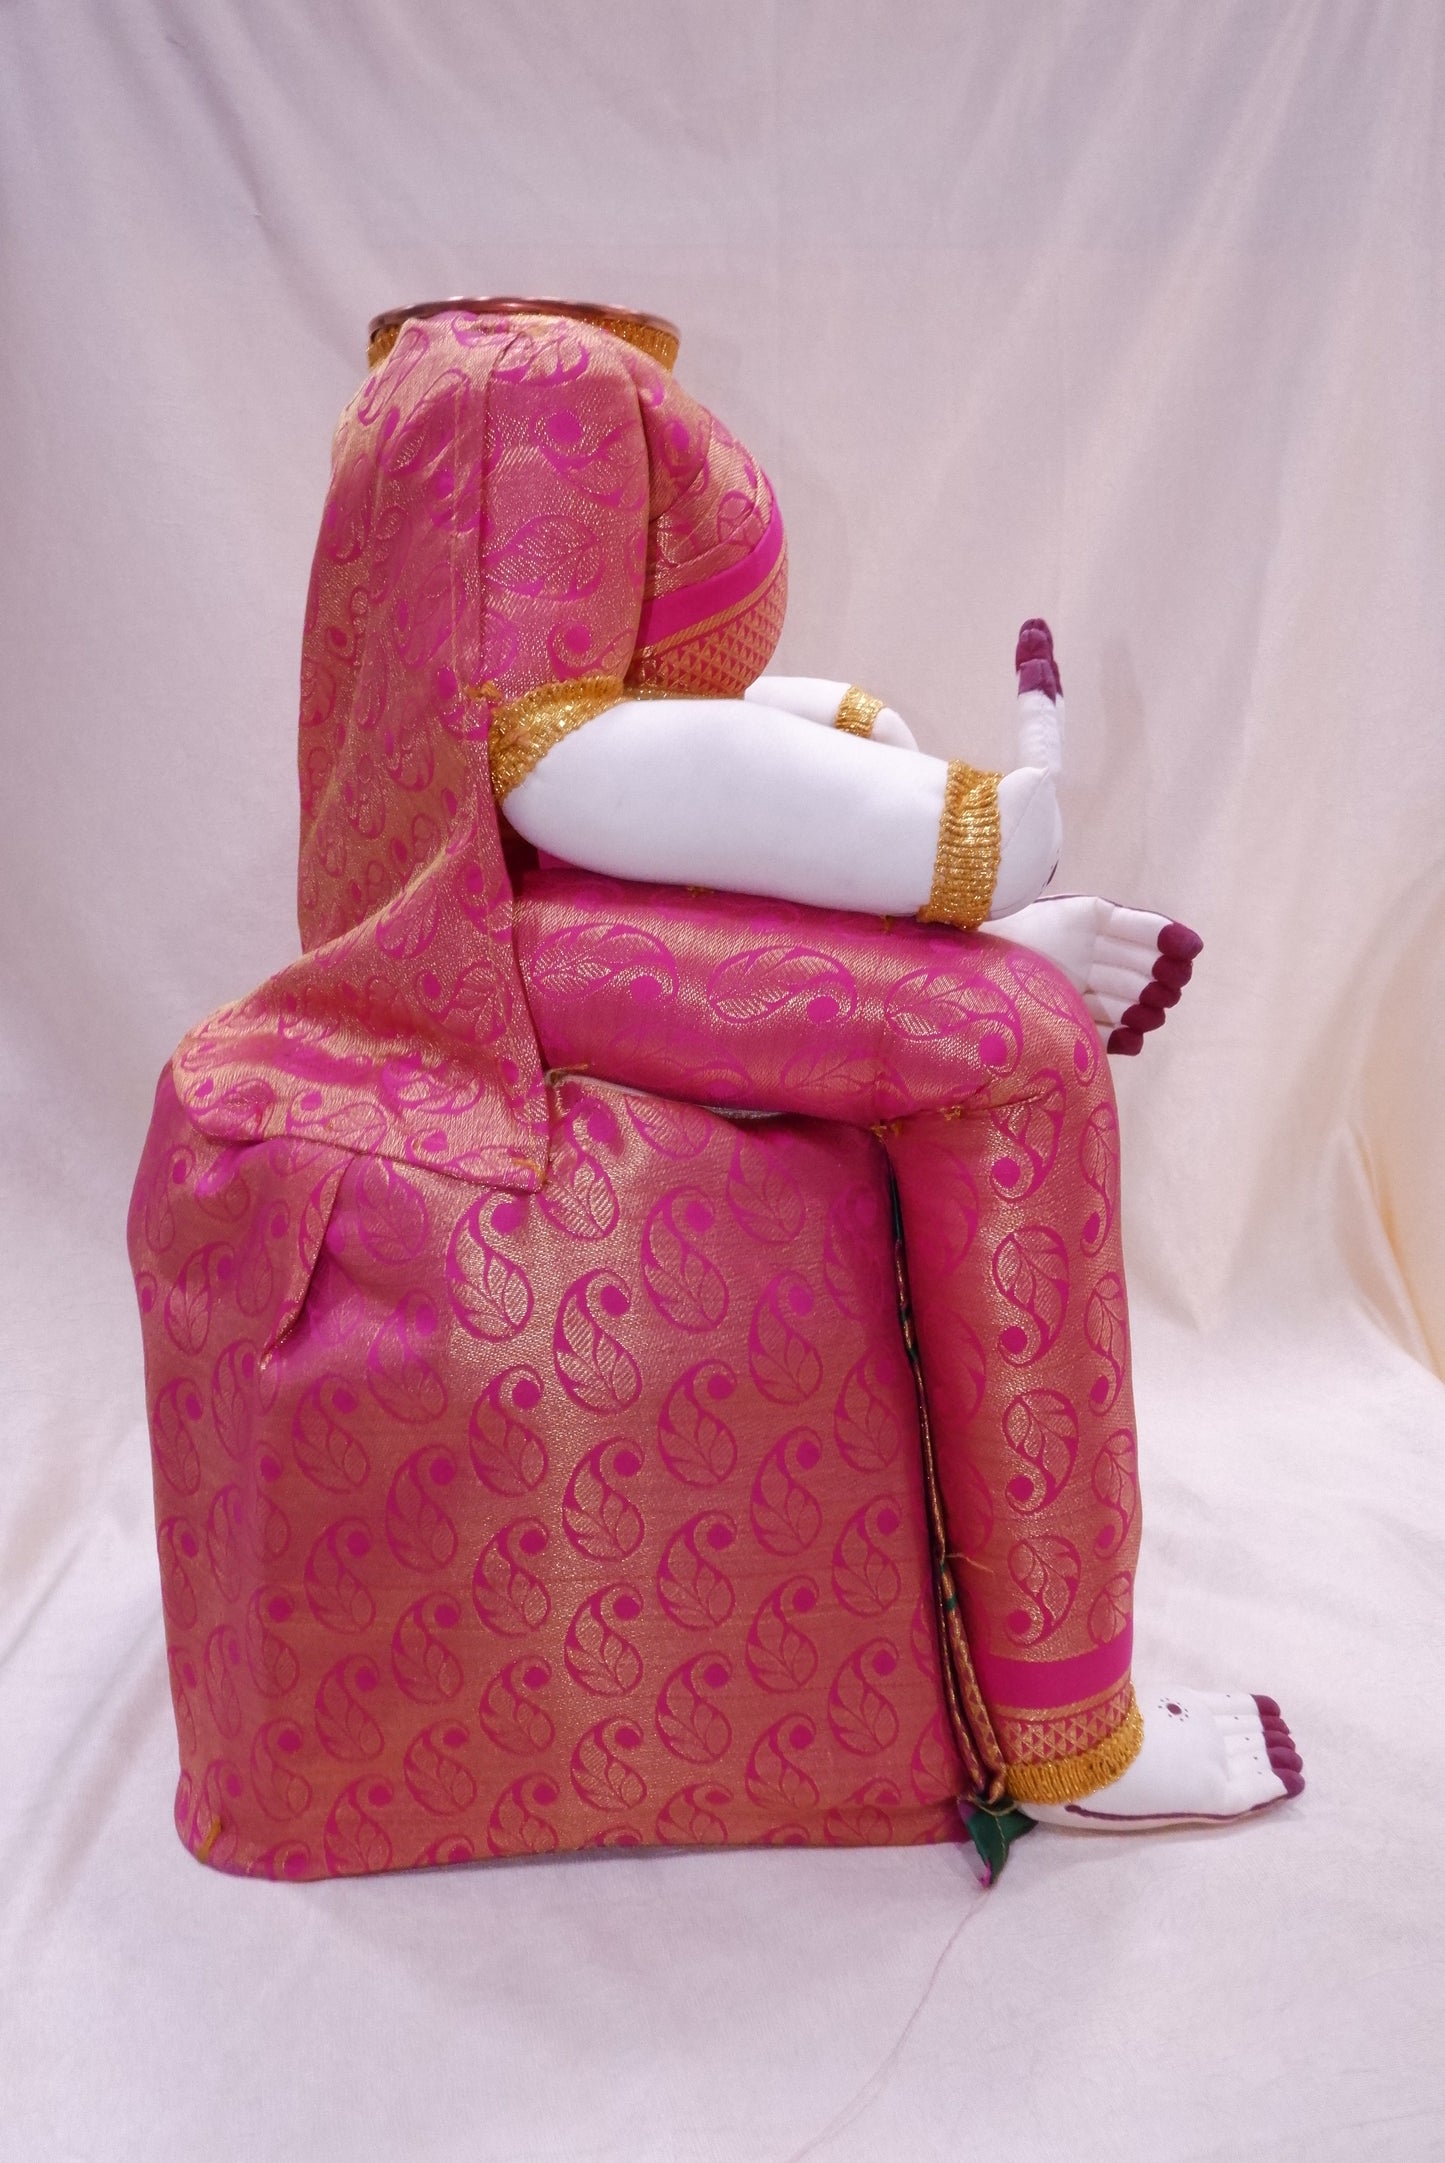 sriman ammavaru vara maha lakshmi stunning pink  21 inches doll